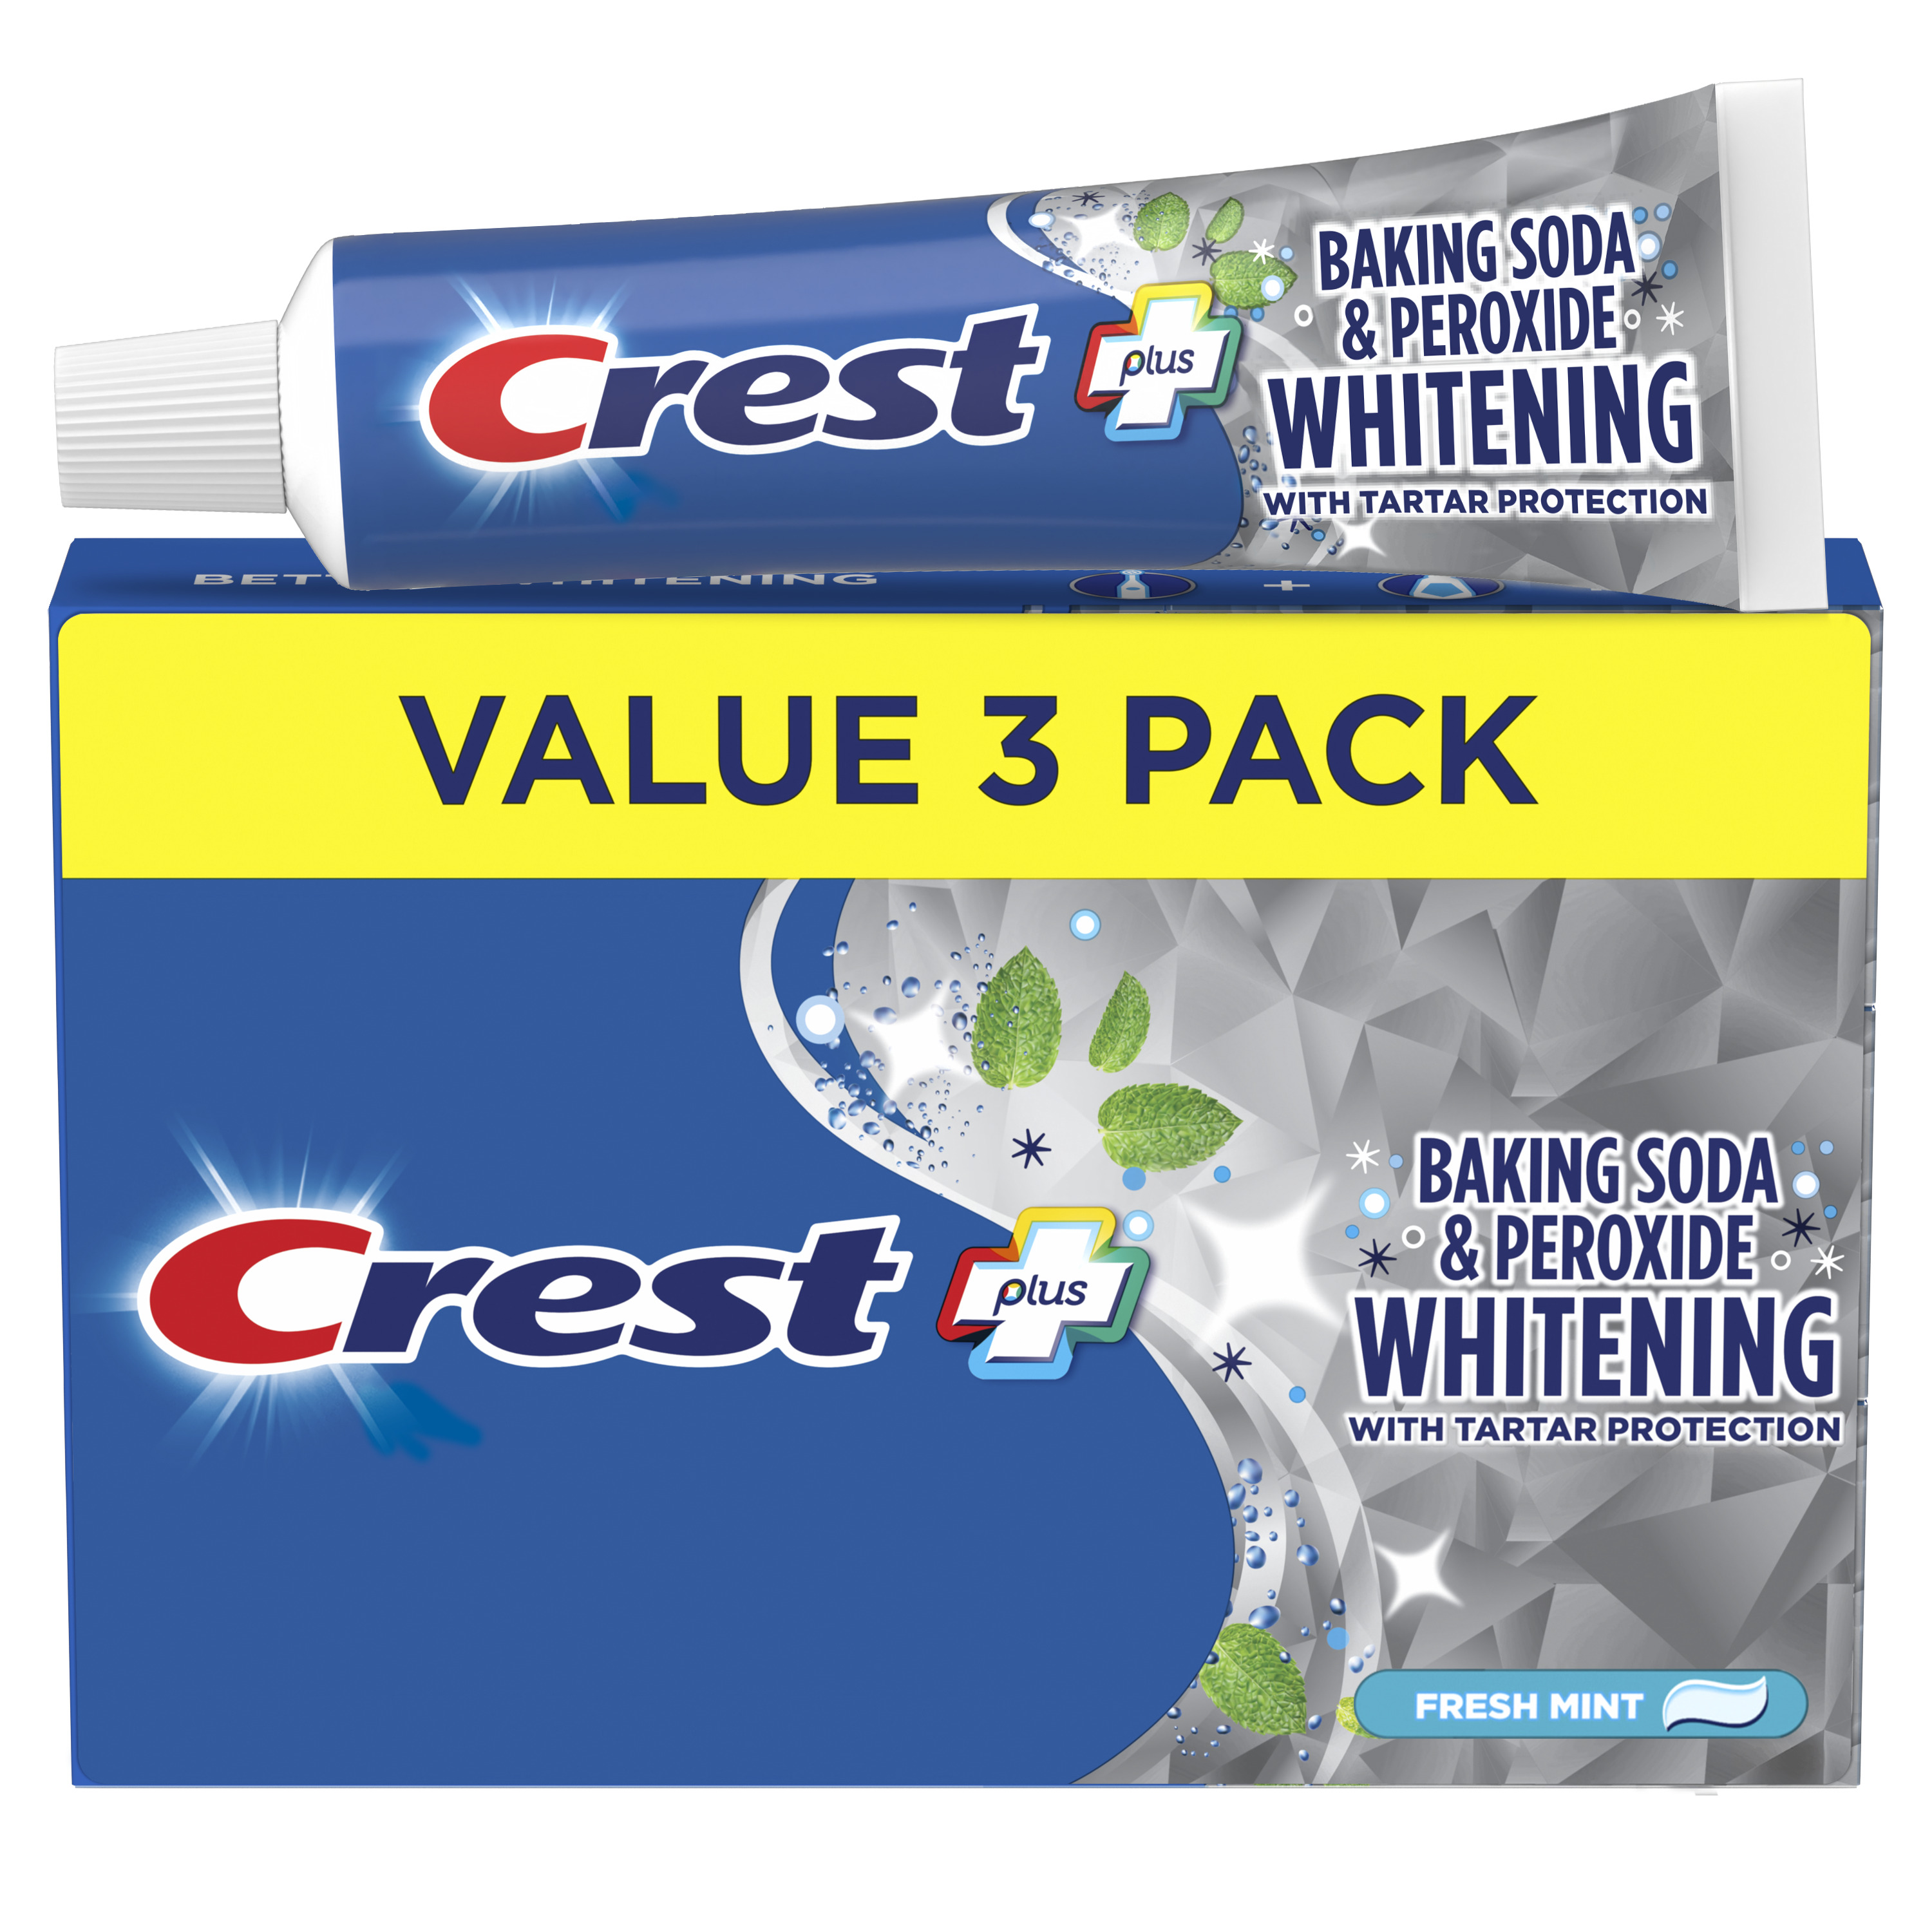 Crest Plus Baking Soda & Peroxide Whitening Toothpaste, Fresh Mint, 5.7 oz, Pack of 3 - image 1 of 6